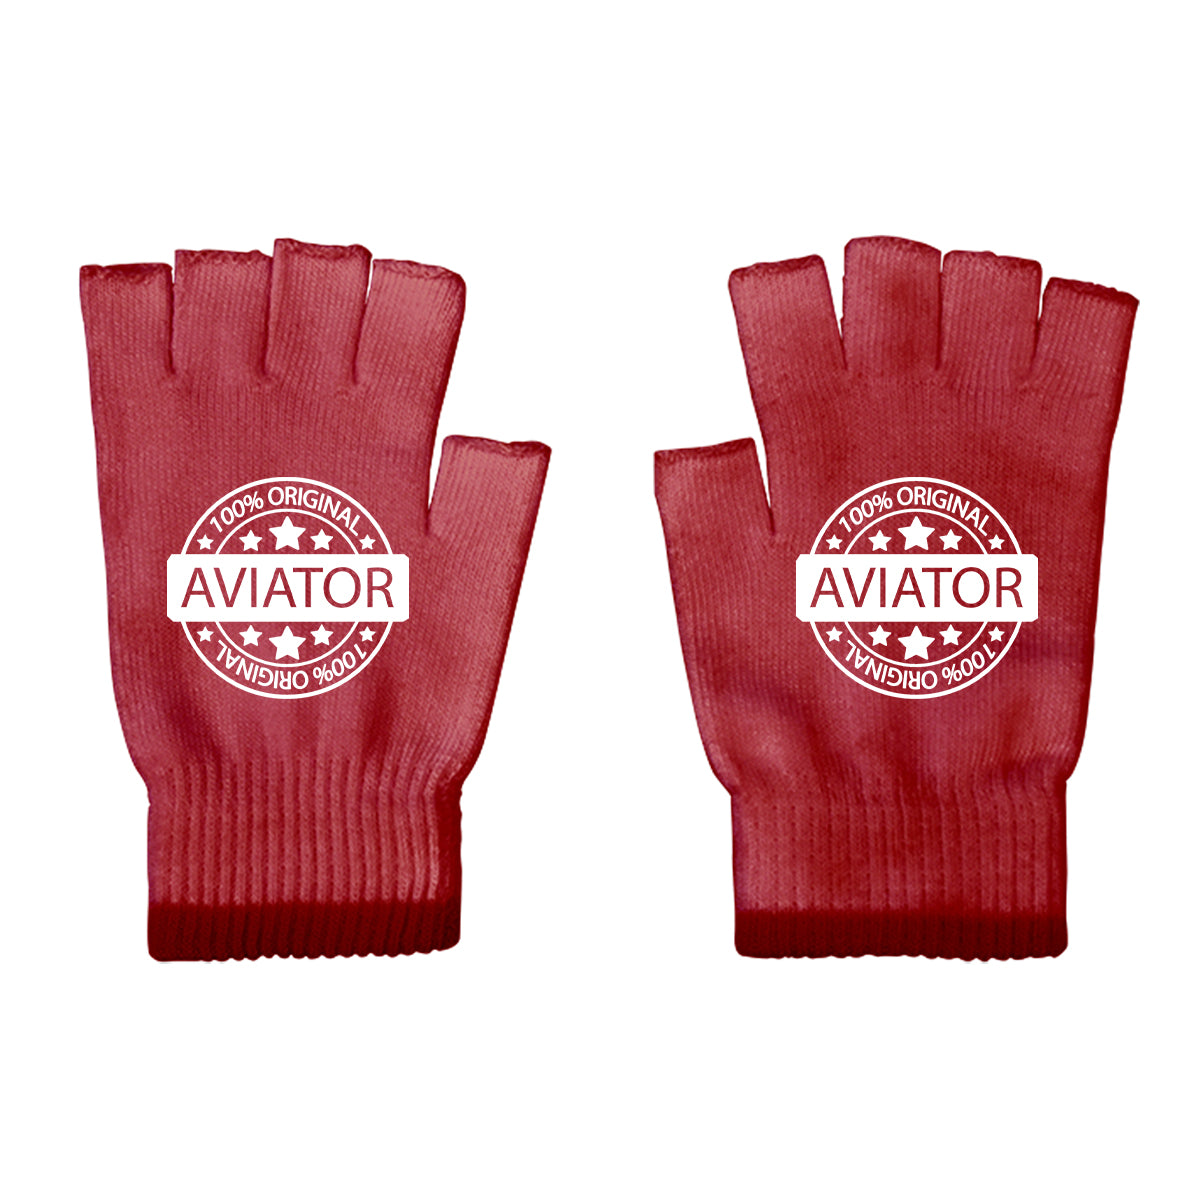 %100 Original Aviator Designed Cut Gloves